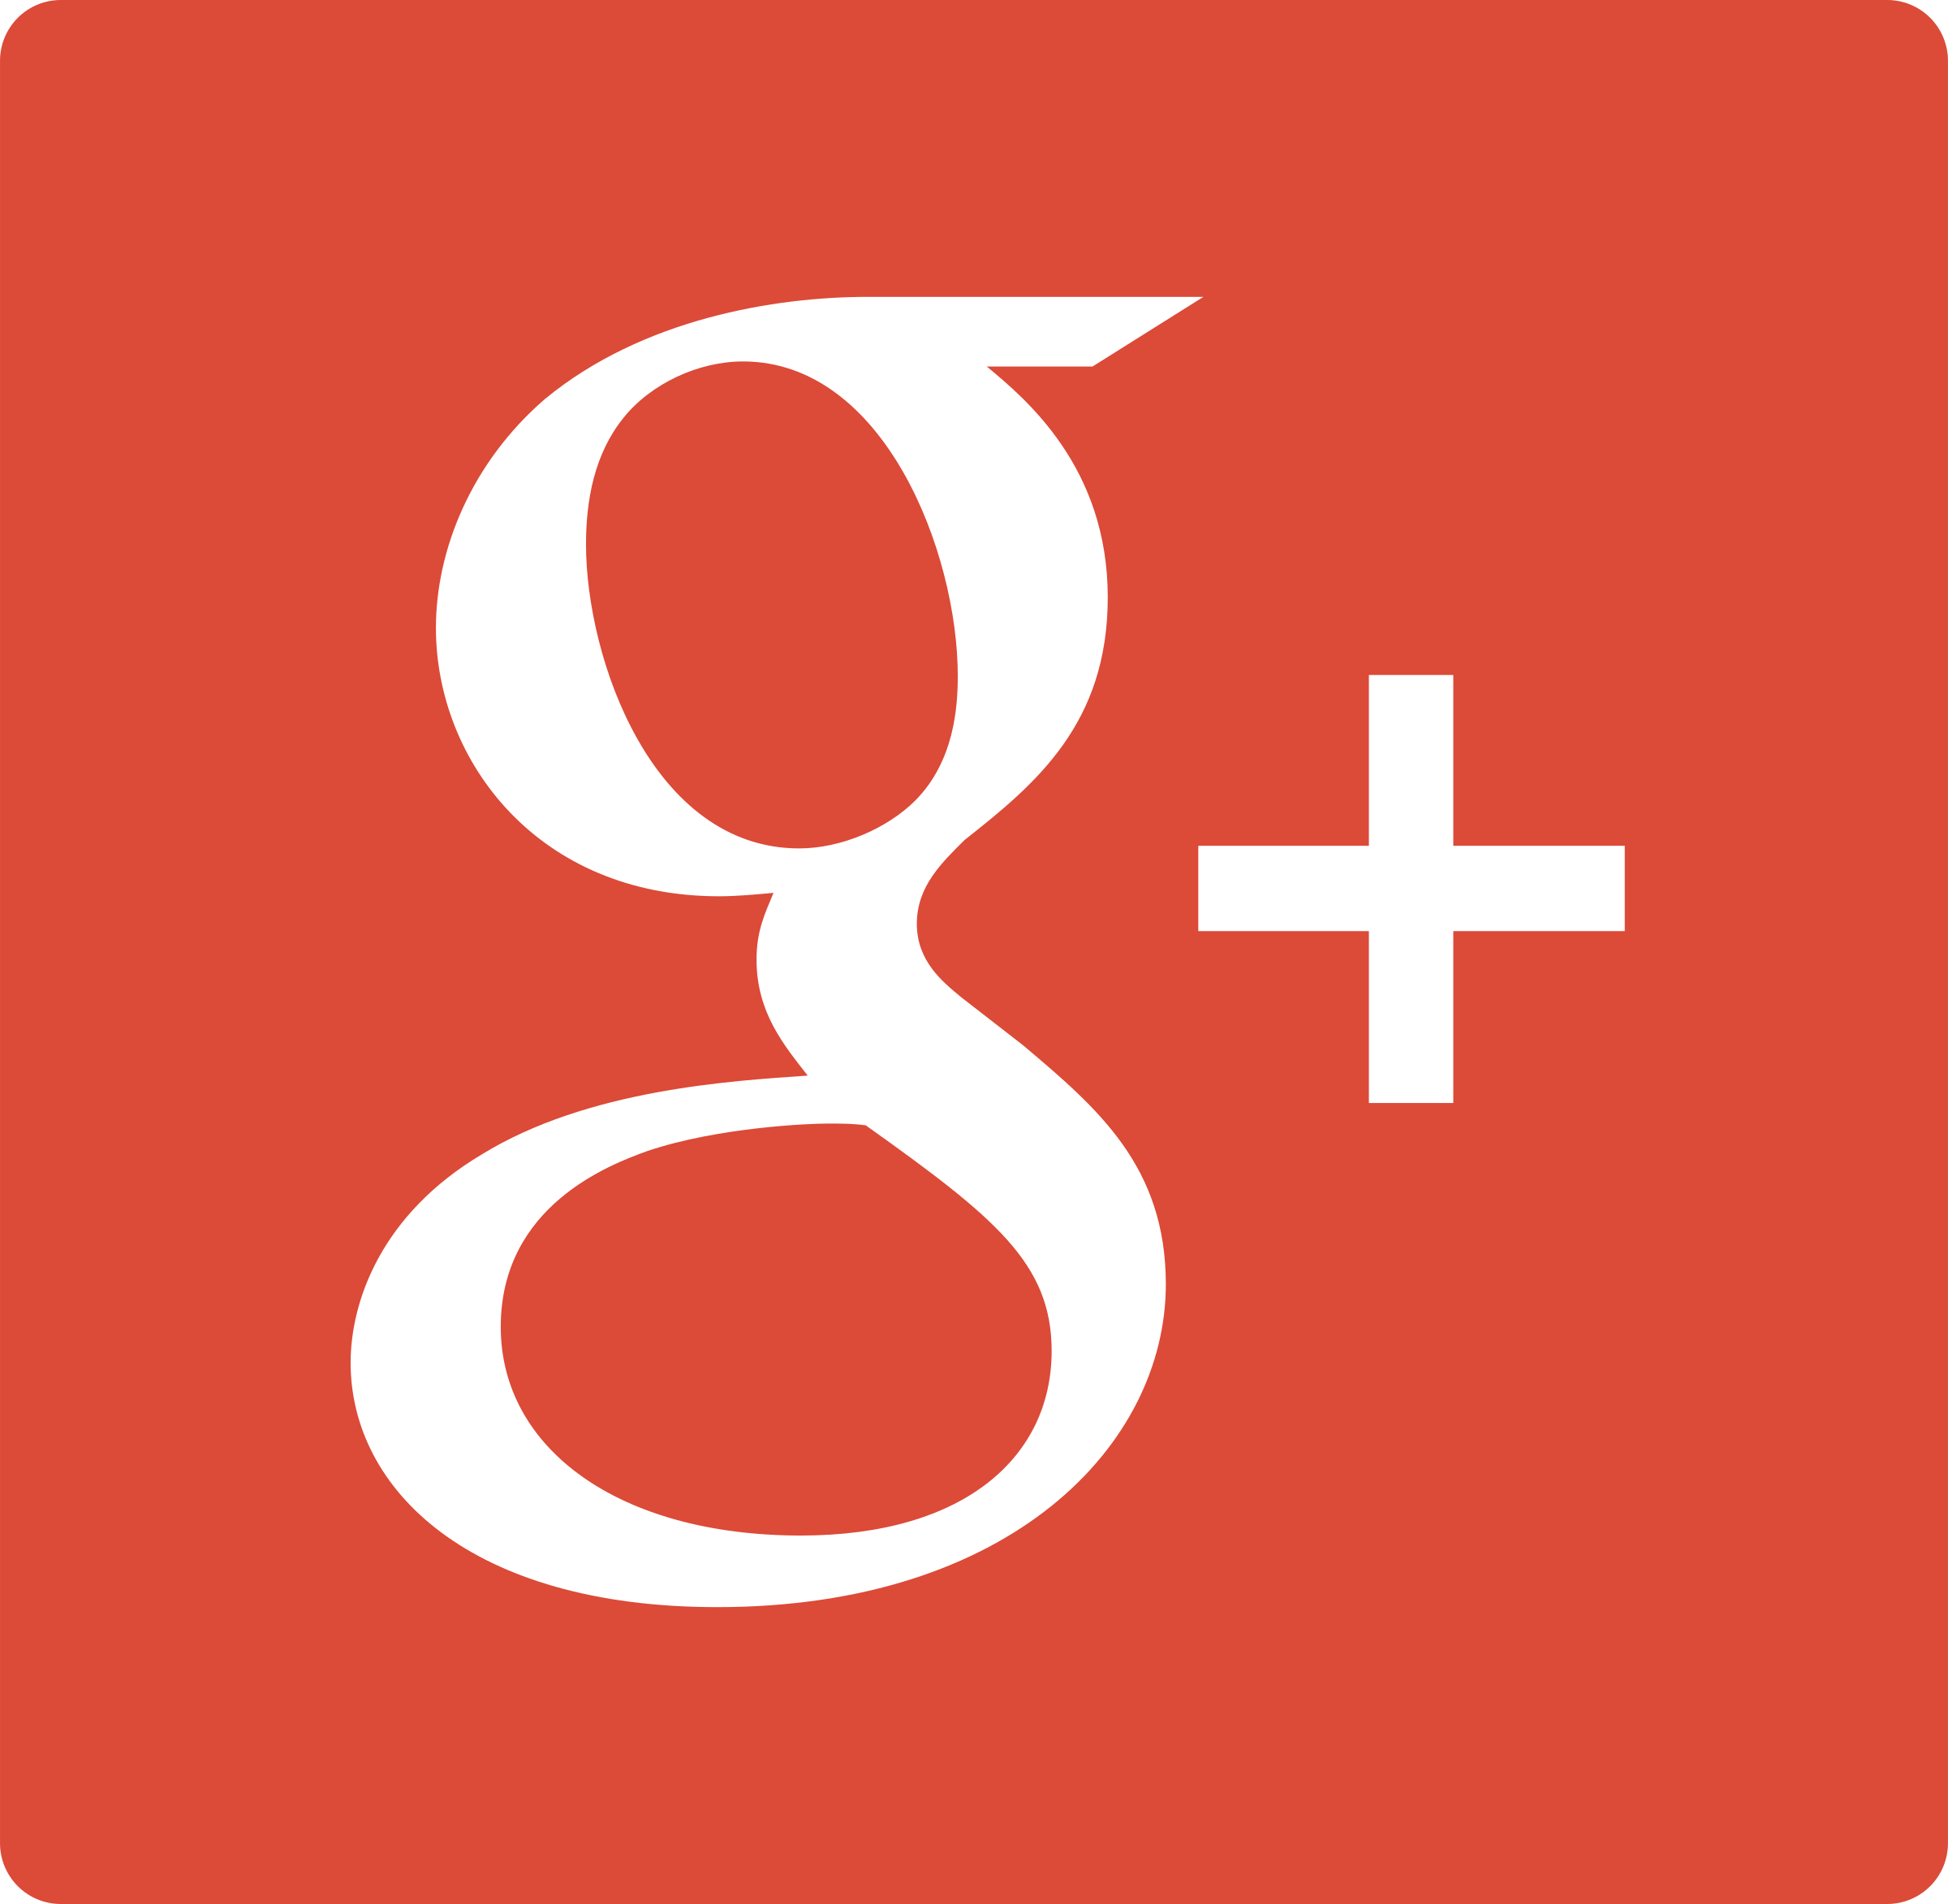 Google Google Plus Logo - Google plus Logo PNG Transparent & SVG Vector - Freebie Supply